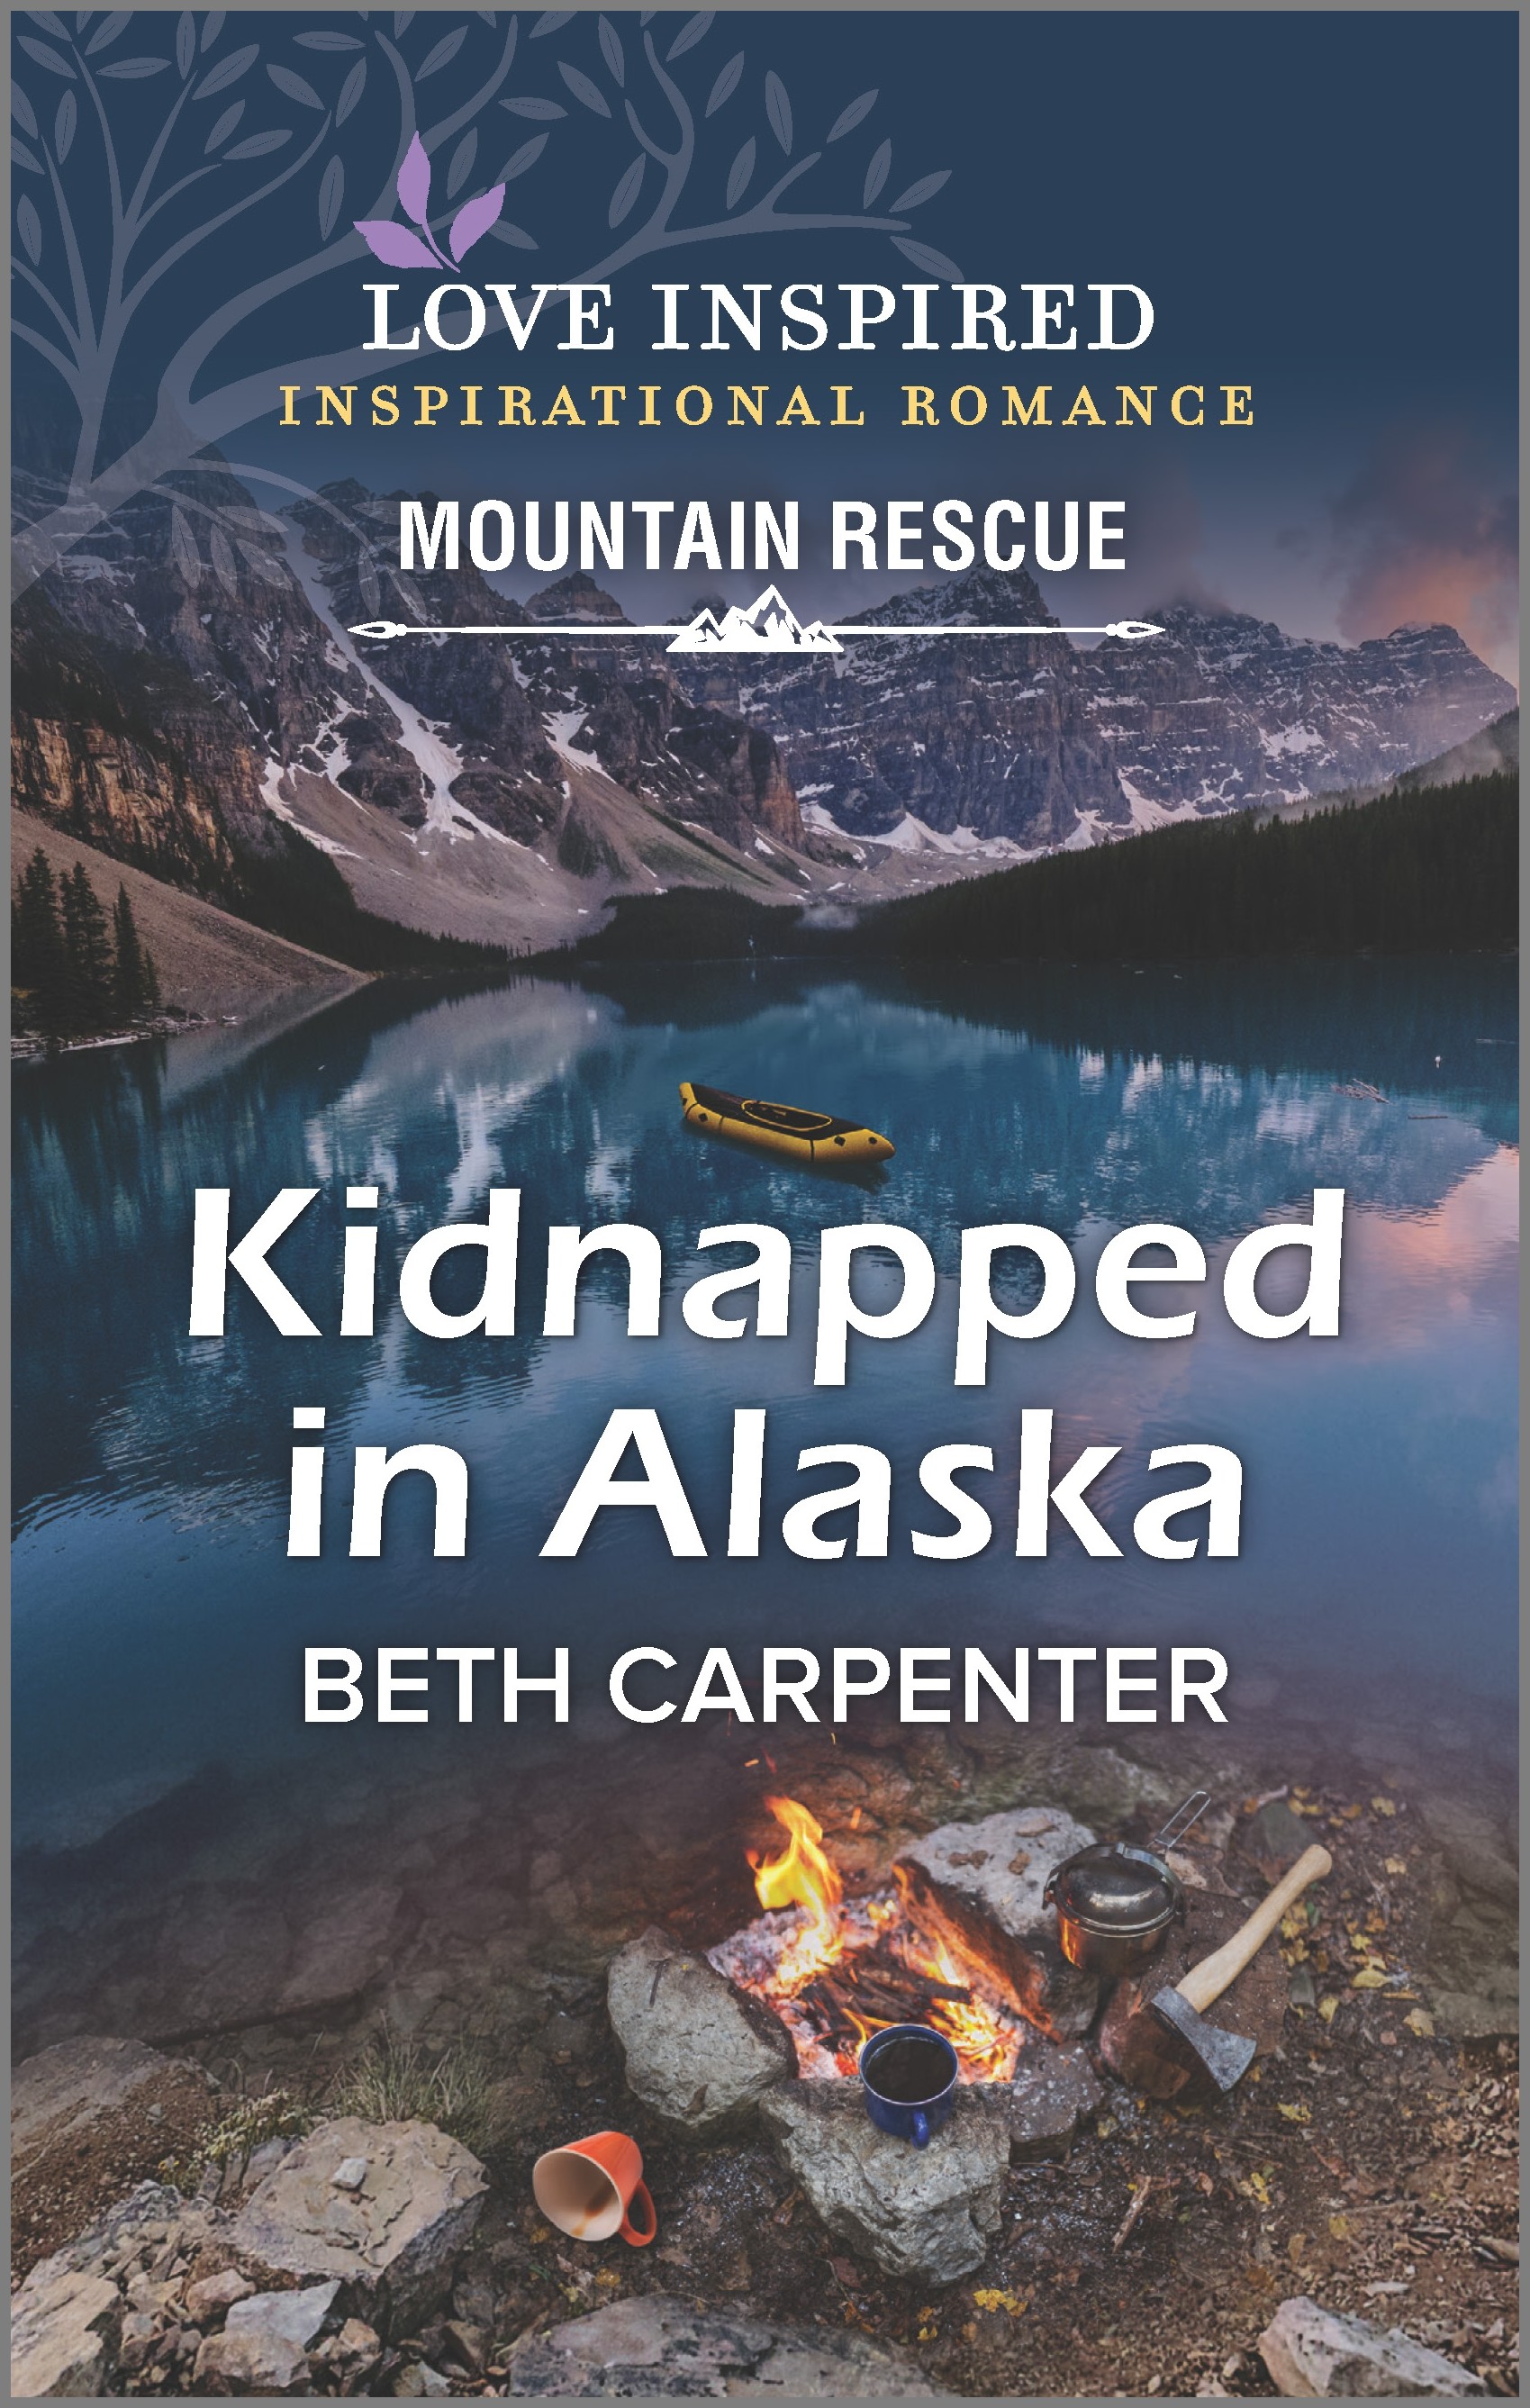 Kidnapped in Alaska by Beth Carpenter